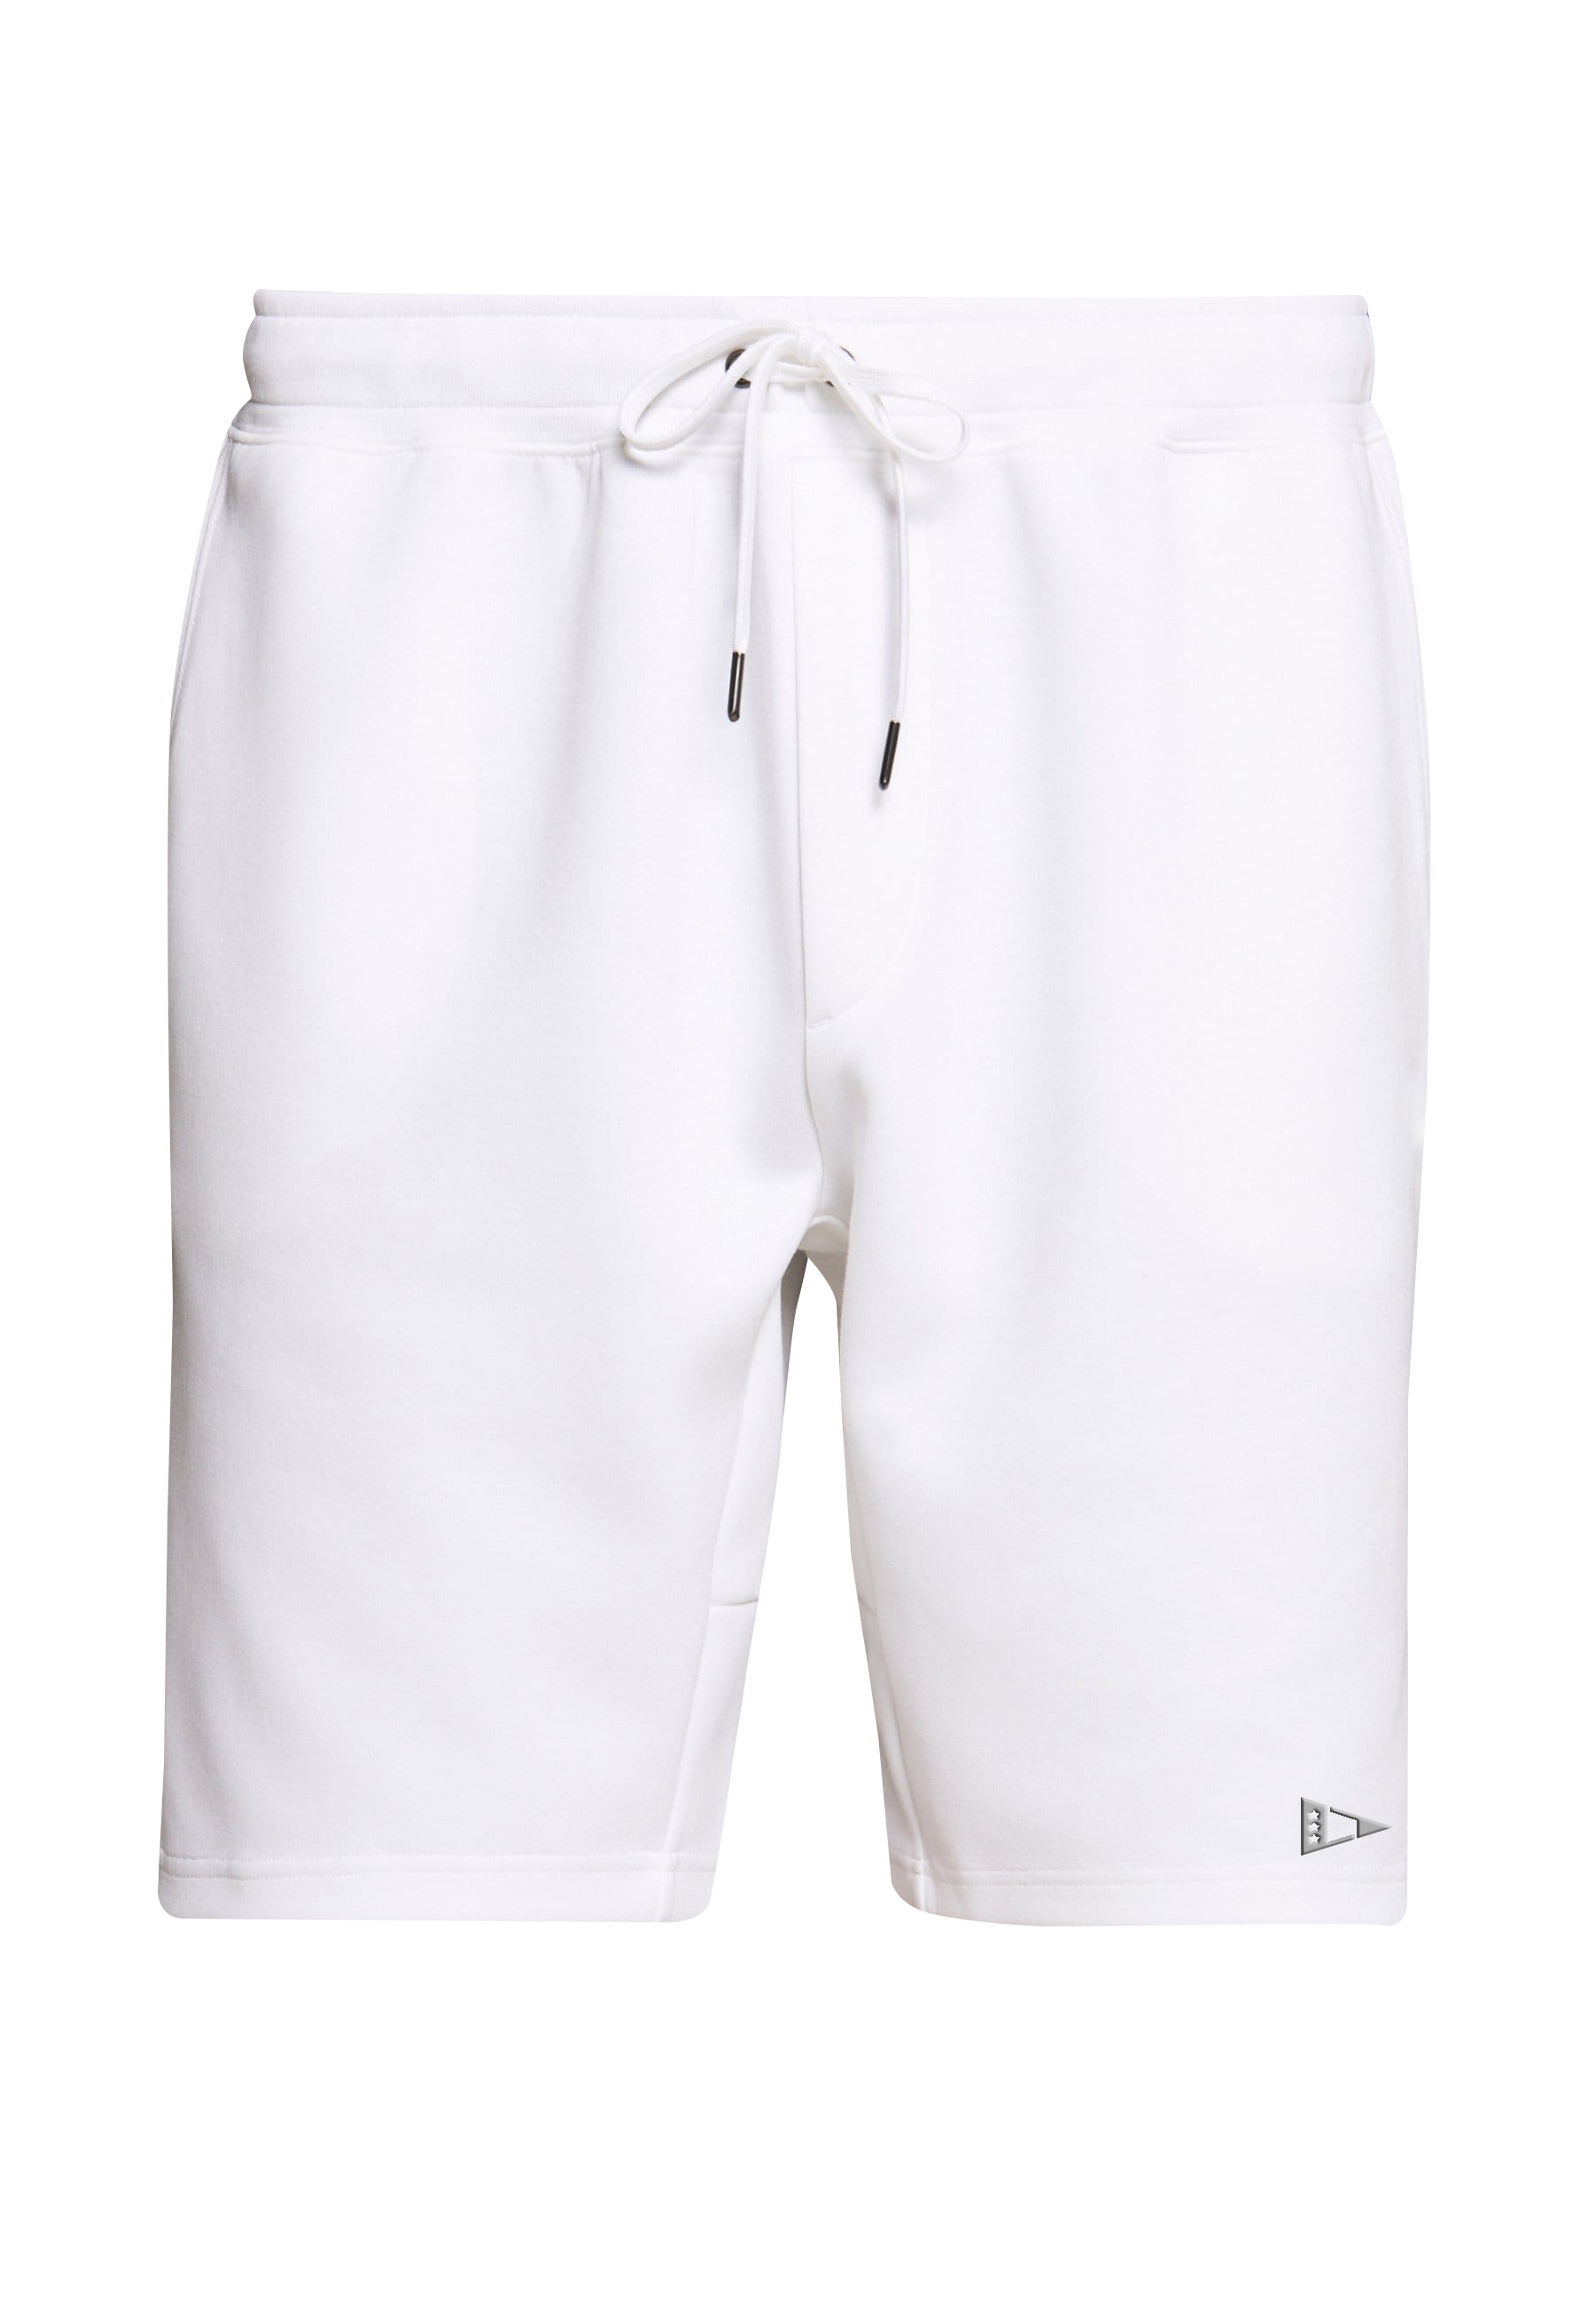 Спортивные шорты мужские Scuola Nautica Italiana 018510 белые L